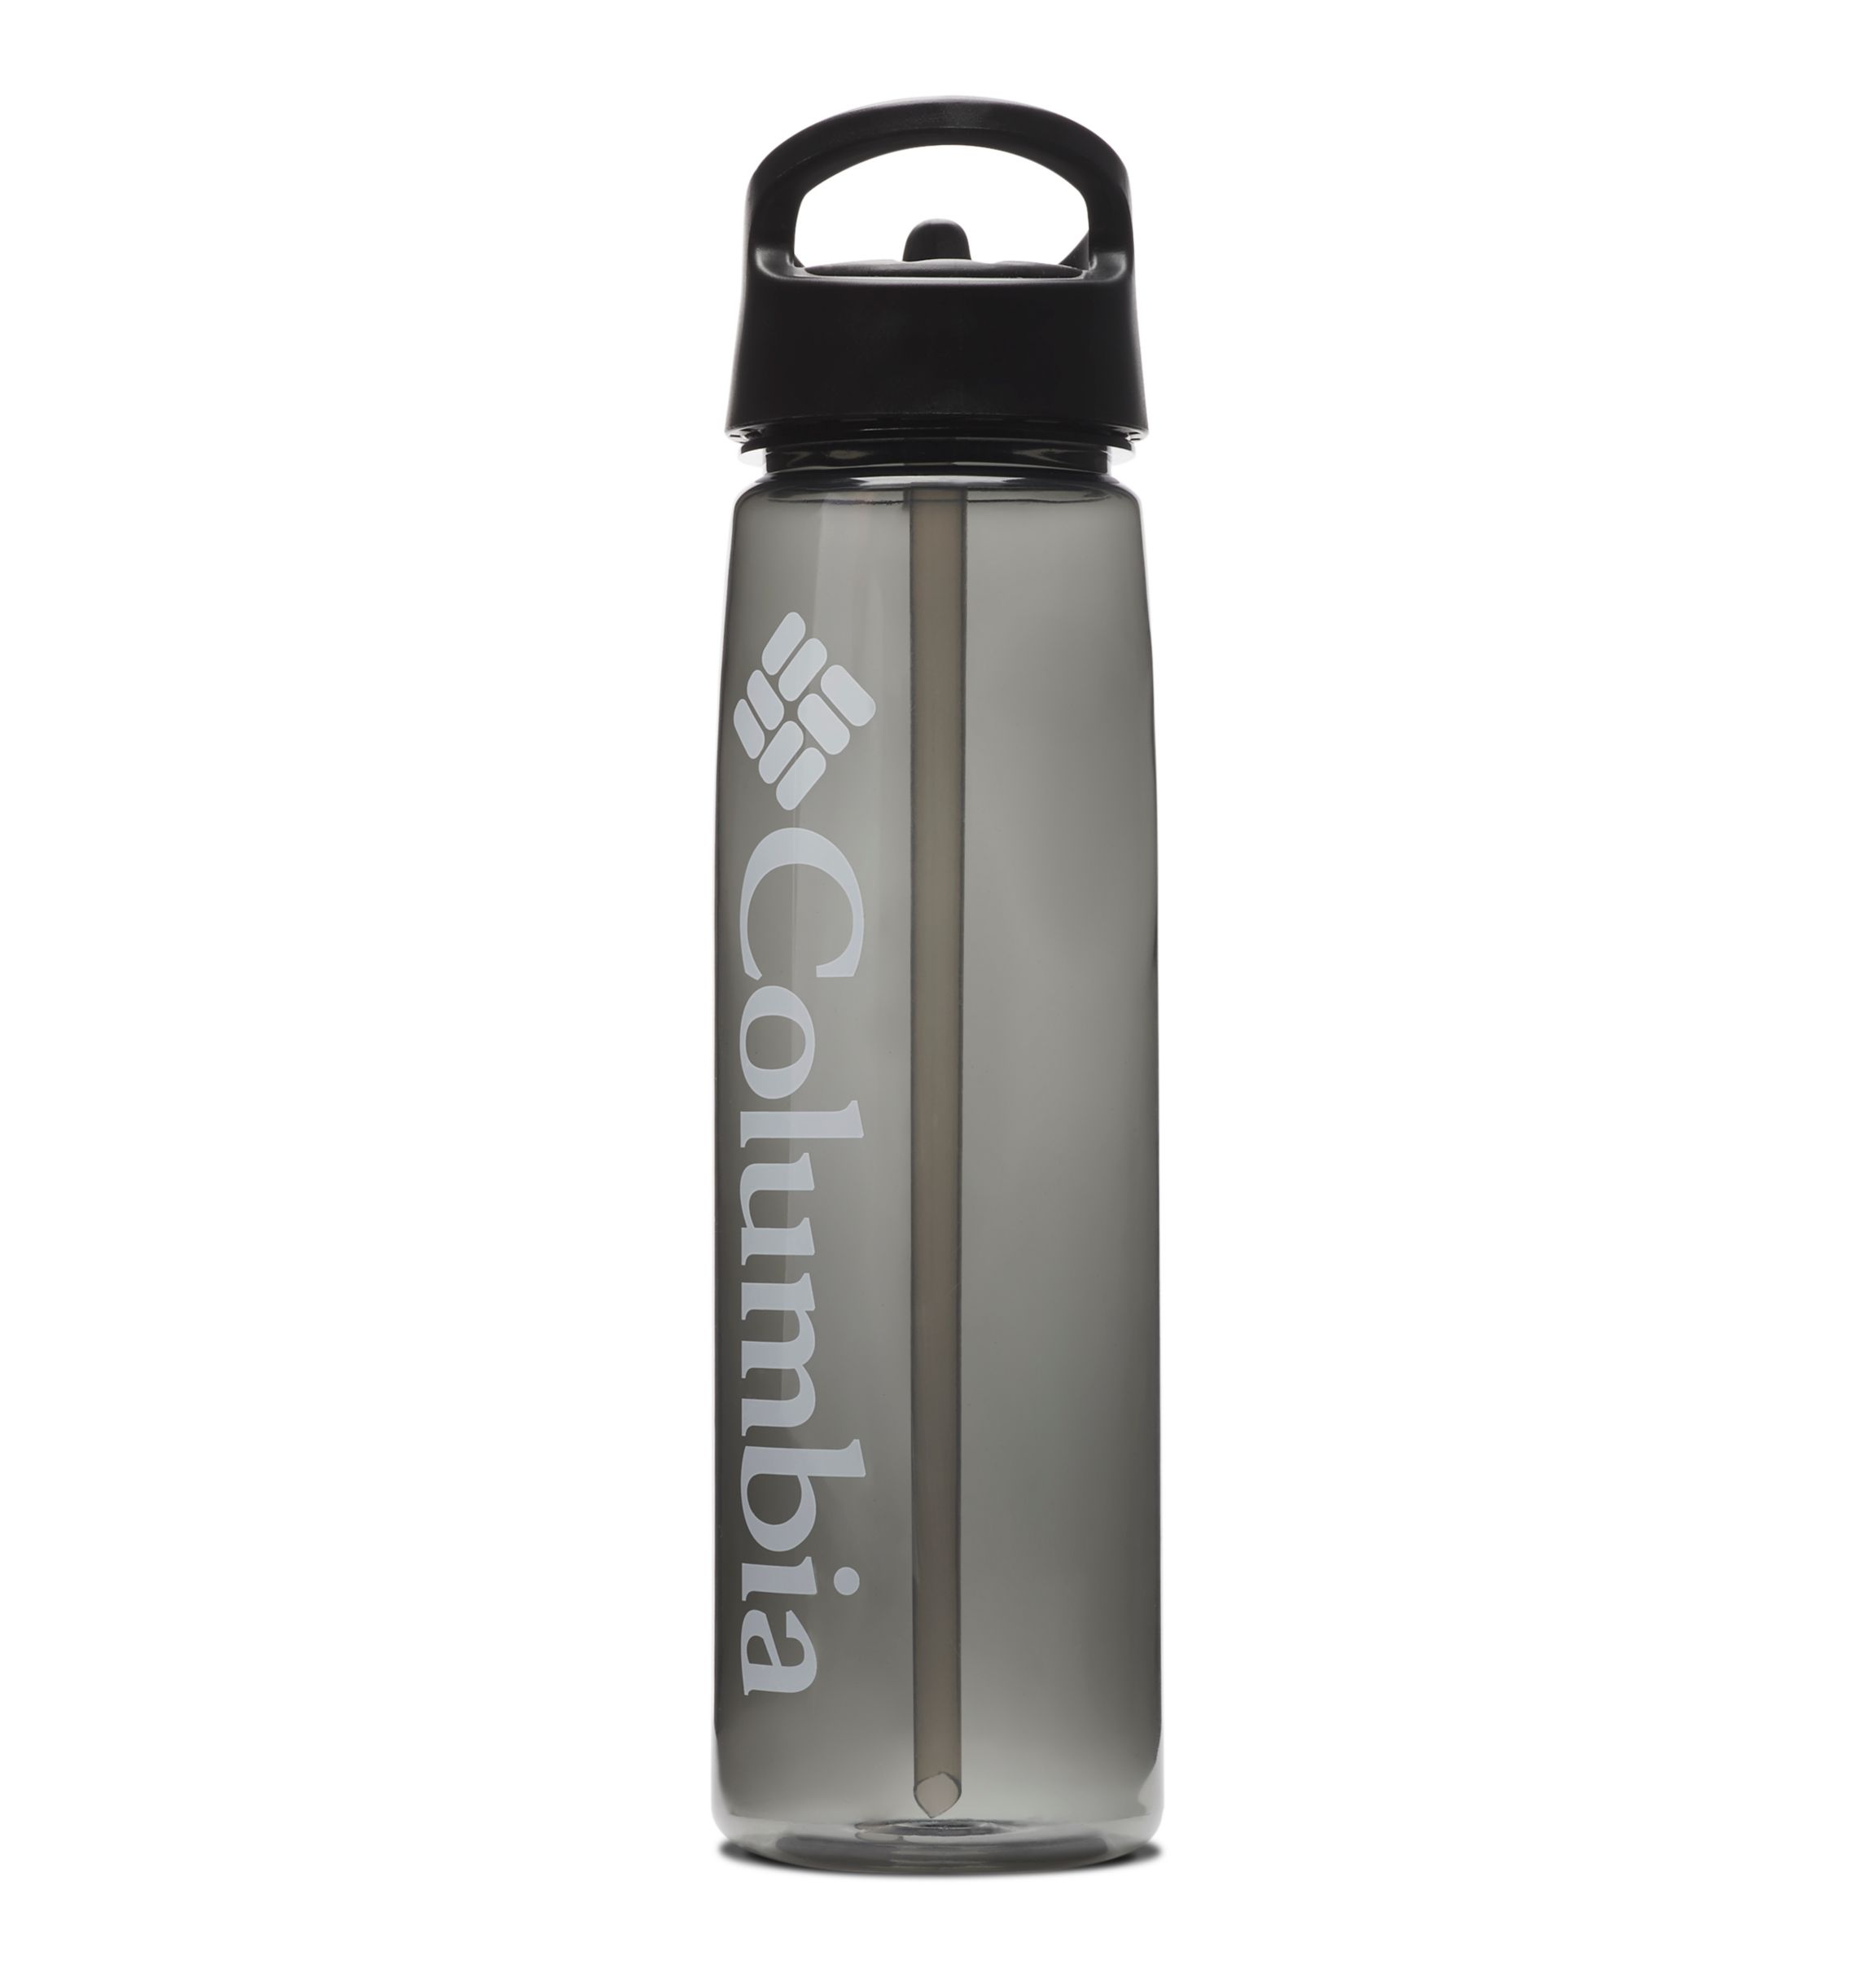 Columbia Silver Water Bottles